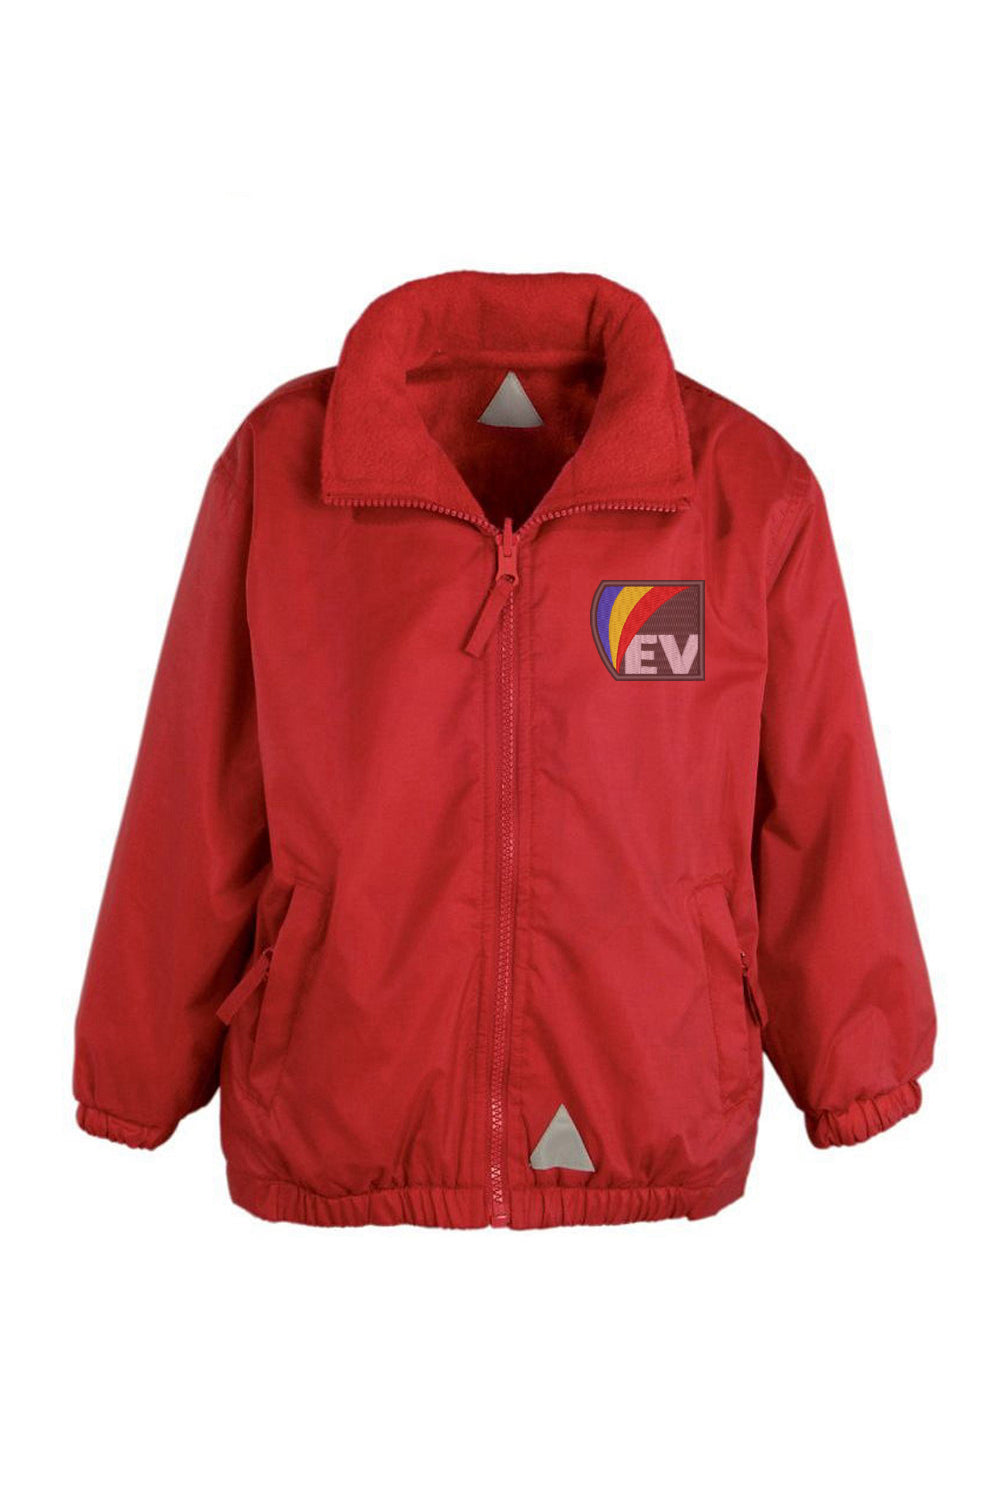 Education Village Springfield Red Shower Jacket